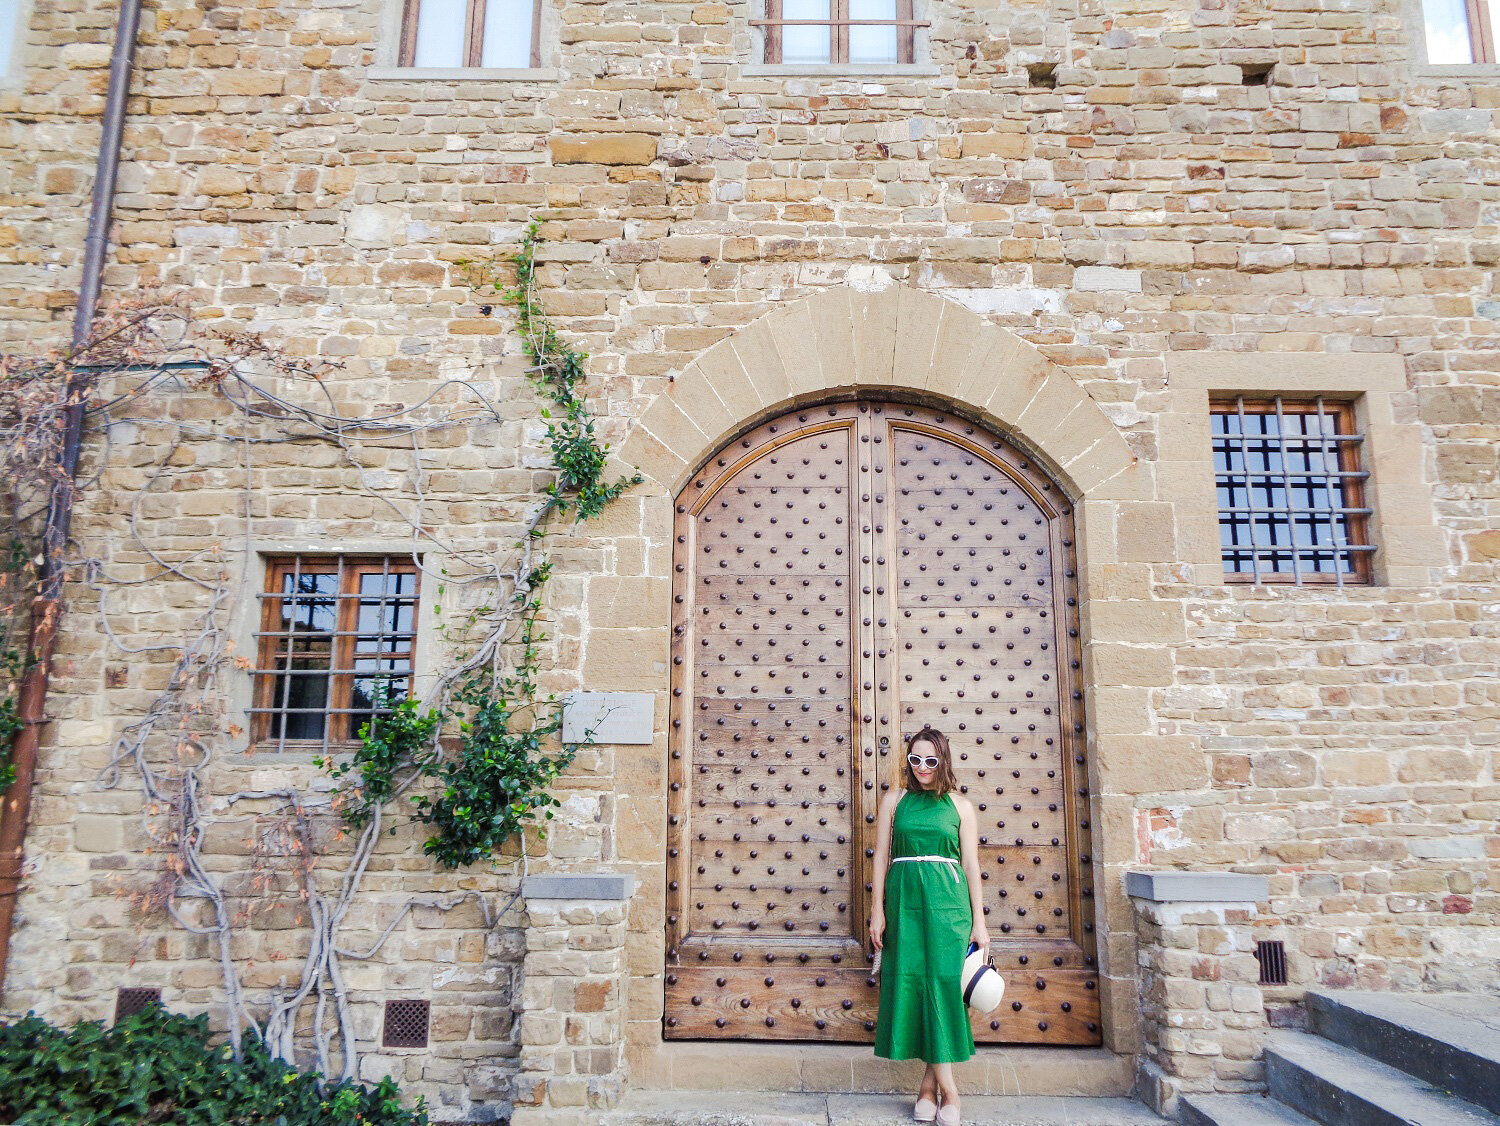  San Miniato al Monte Abbey, Florence, Italy | Blooming Magnolias Blog | Travel, Europe, Tuscany 